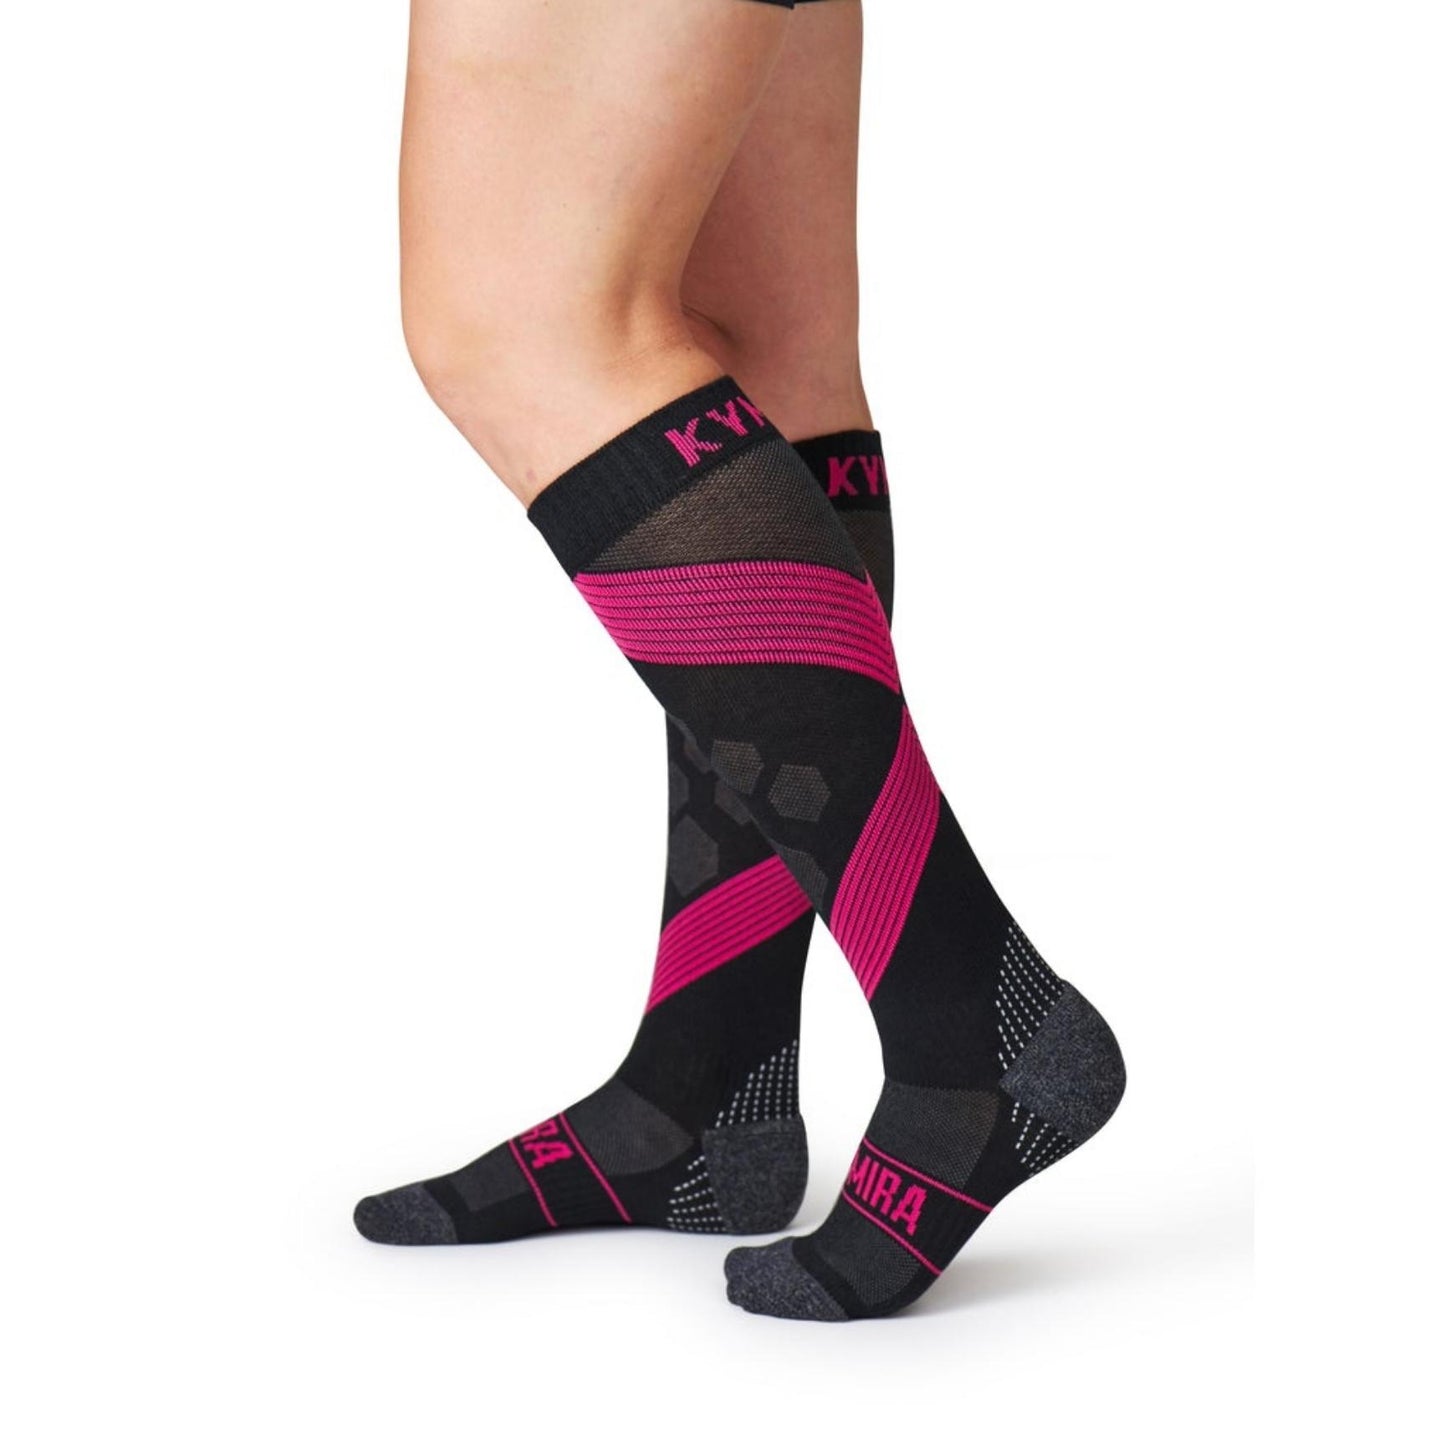 KYMIRA Infrared Compression Socks - Black/Pink